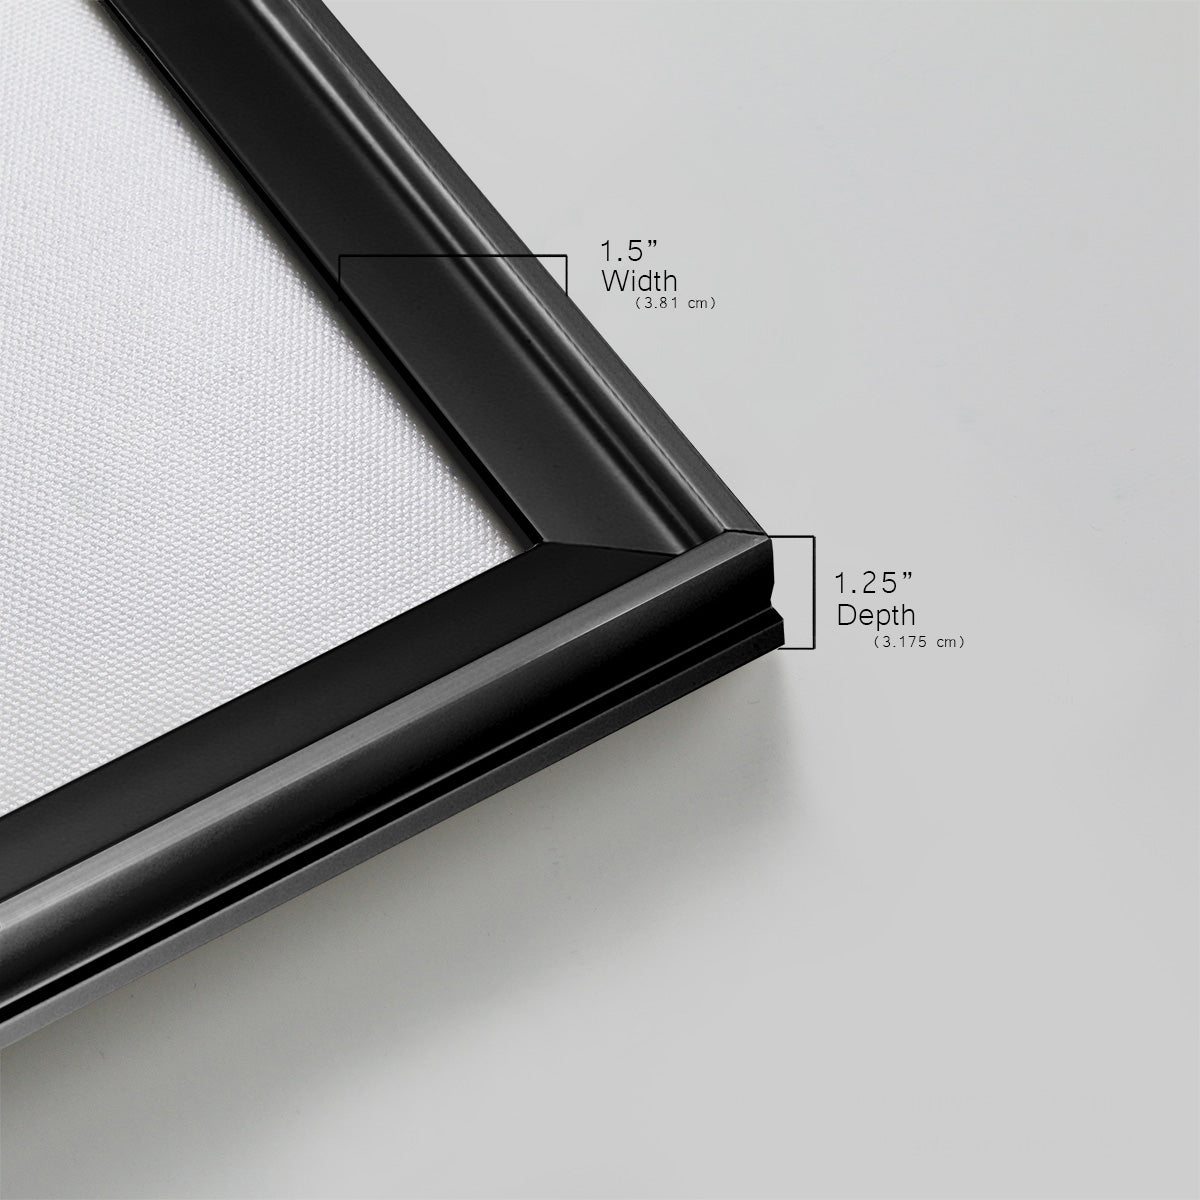 Zen Shapes II Premium Framed Print - Ready to Hang